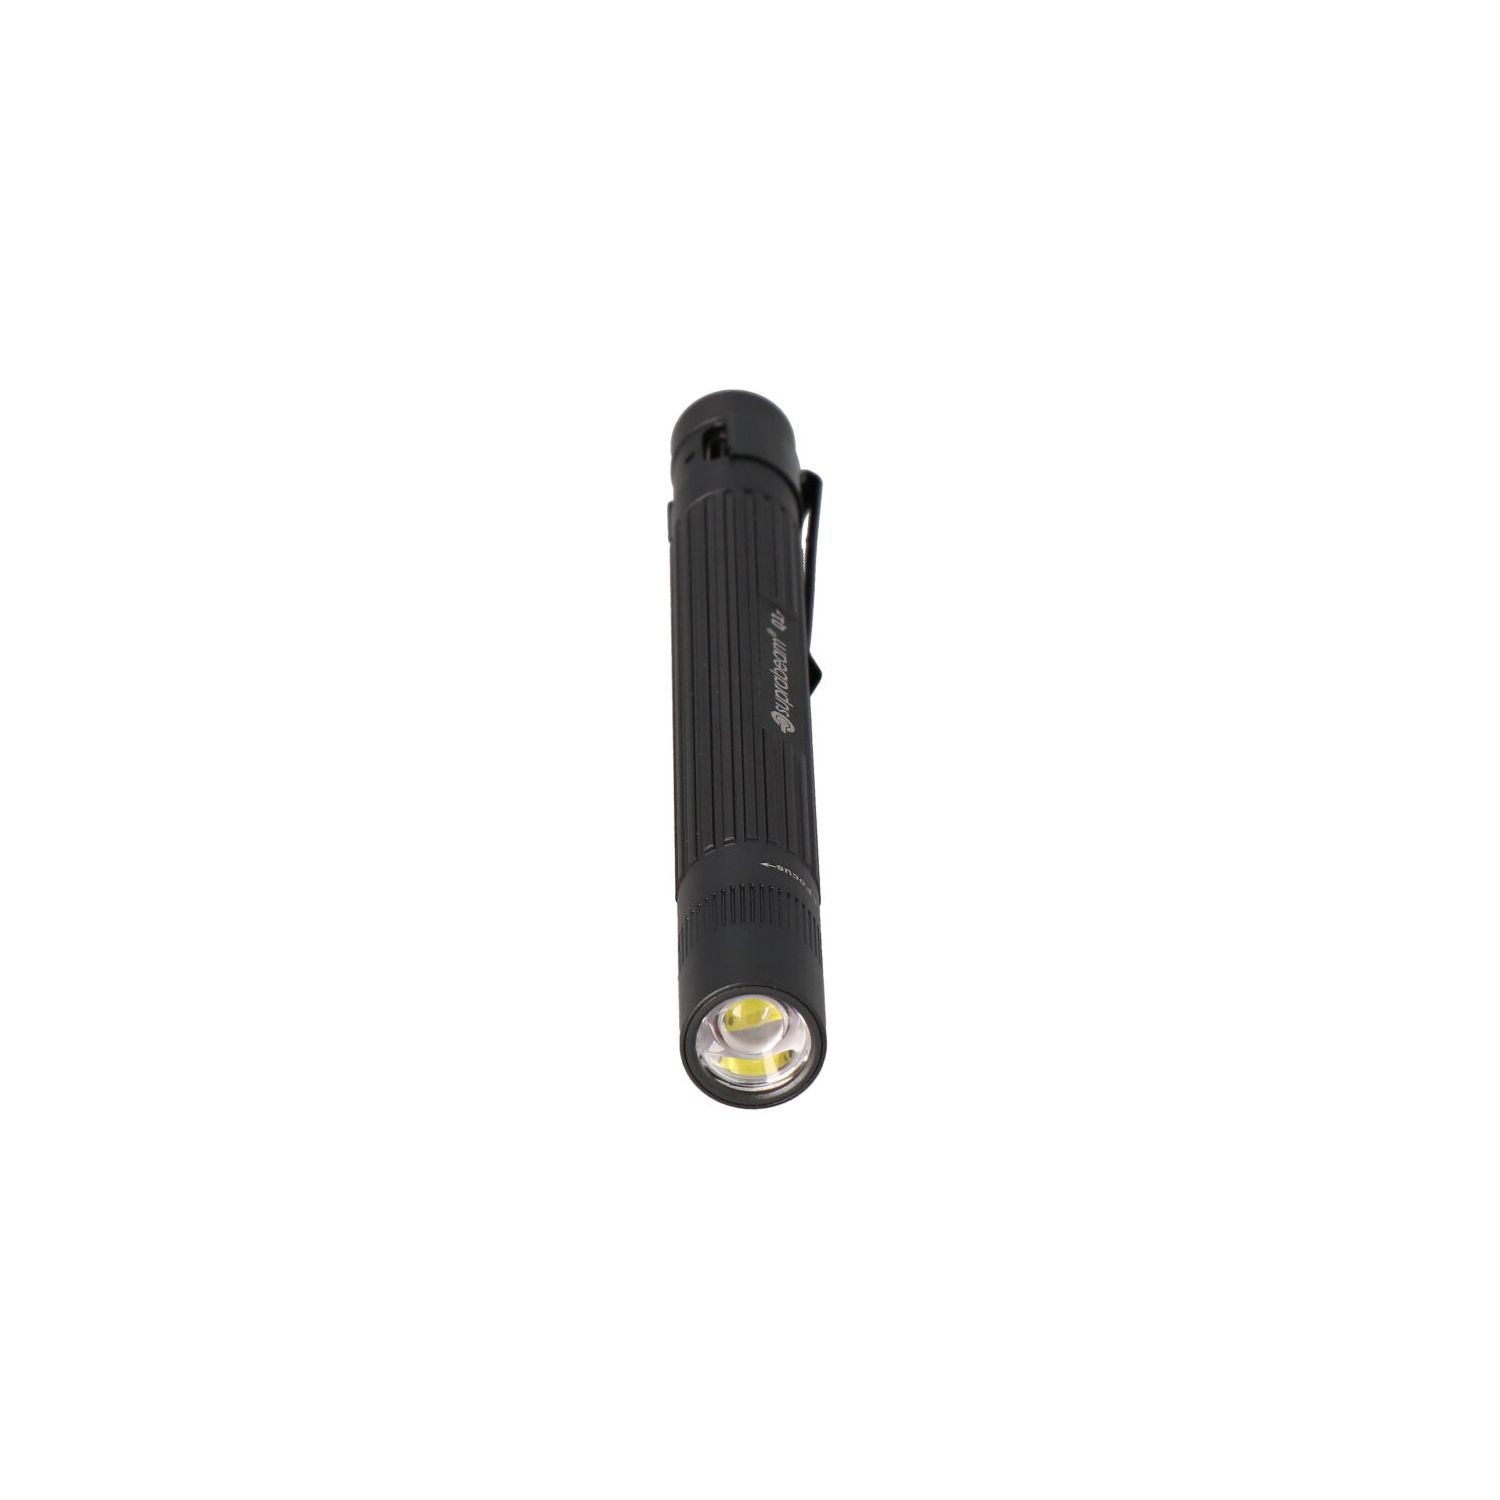 font color=black>Torcia tascabile LED Suprabeam Q1r 550lm</font> -  GIFAS-ELECTRIC GmbH